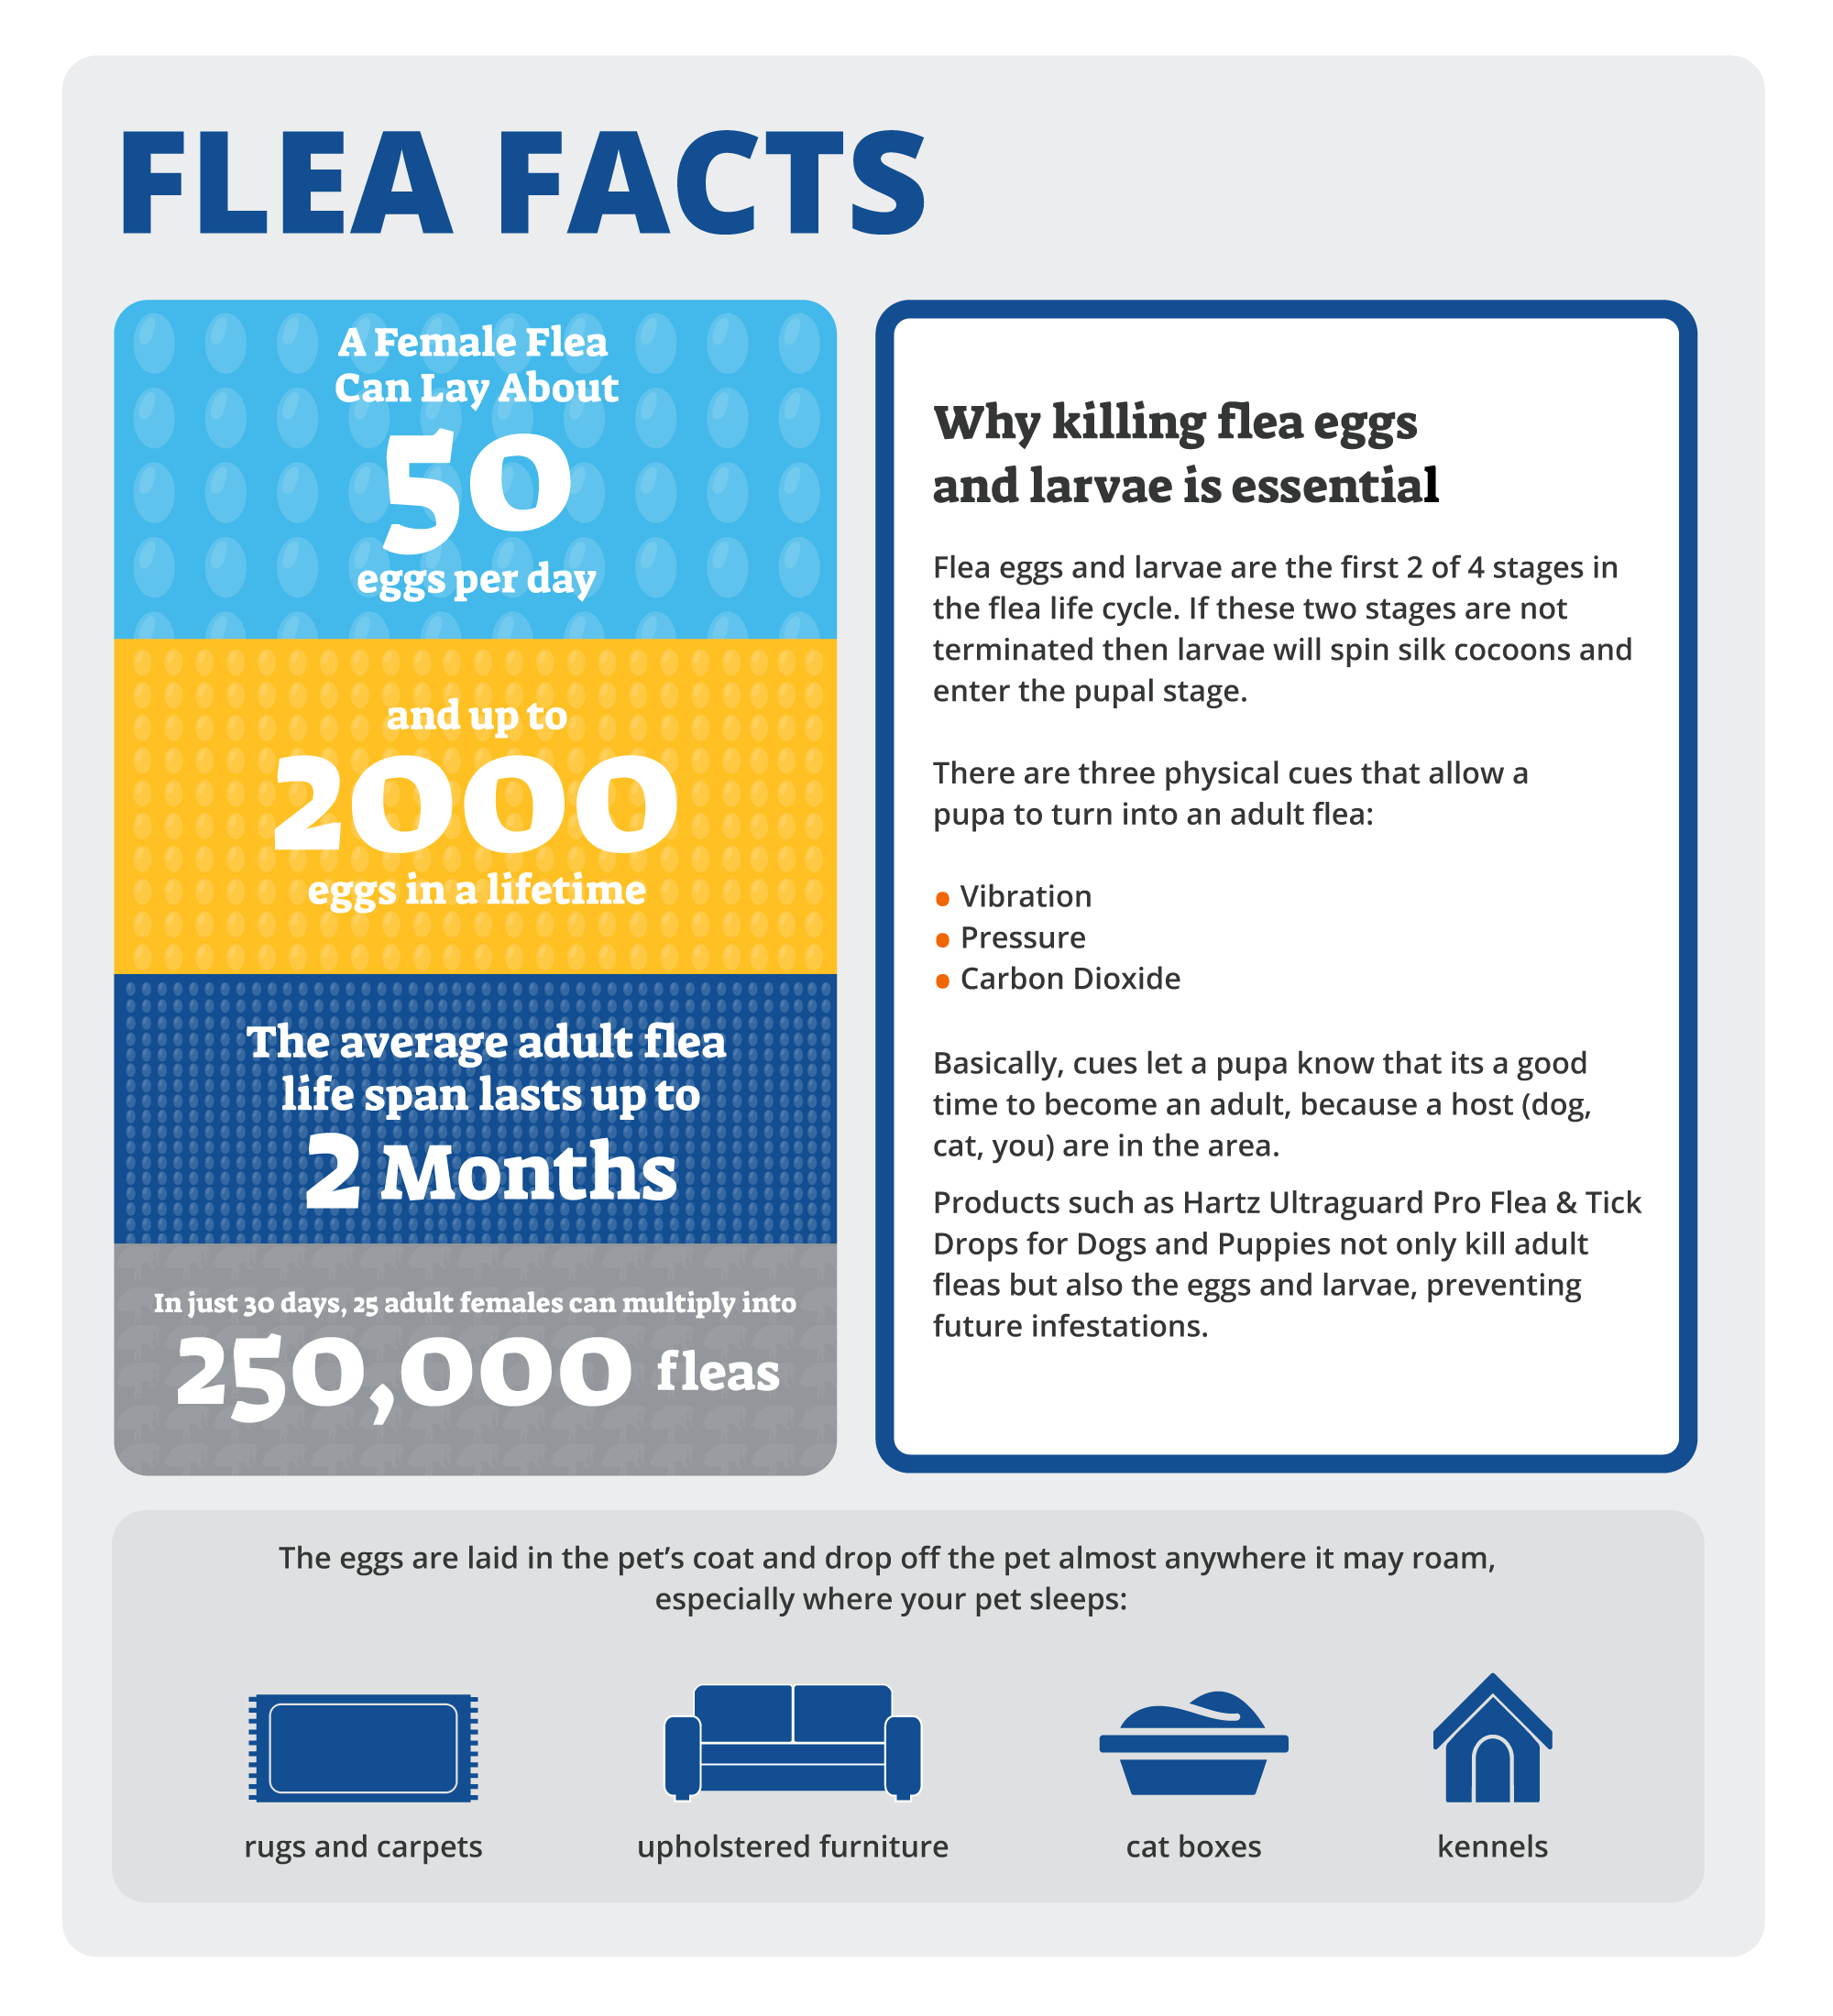 Hartz UltraGuard flea facts. Hartz UltraGuard provides products and inforation about flea prevention and tick prevention.